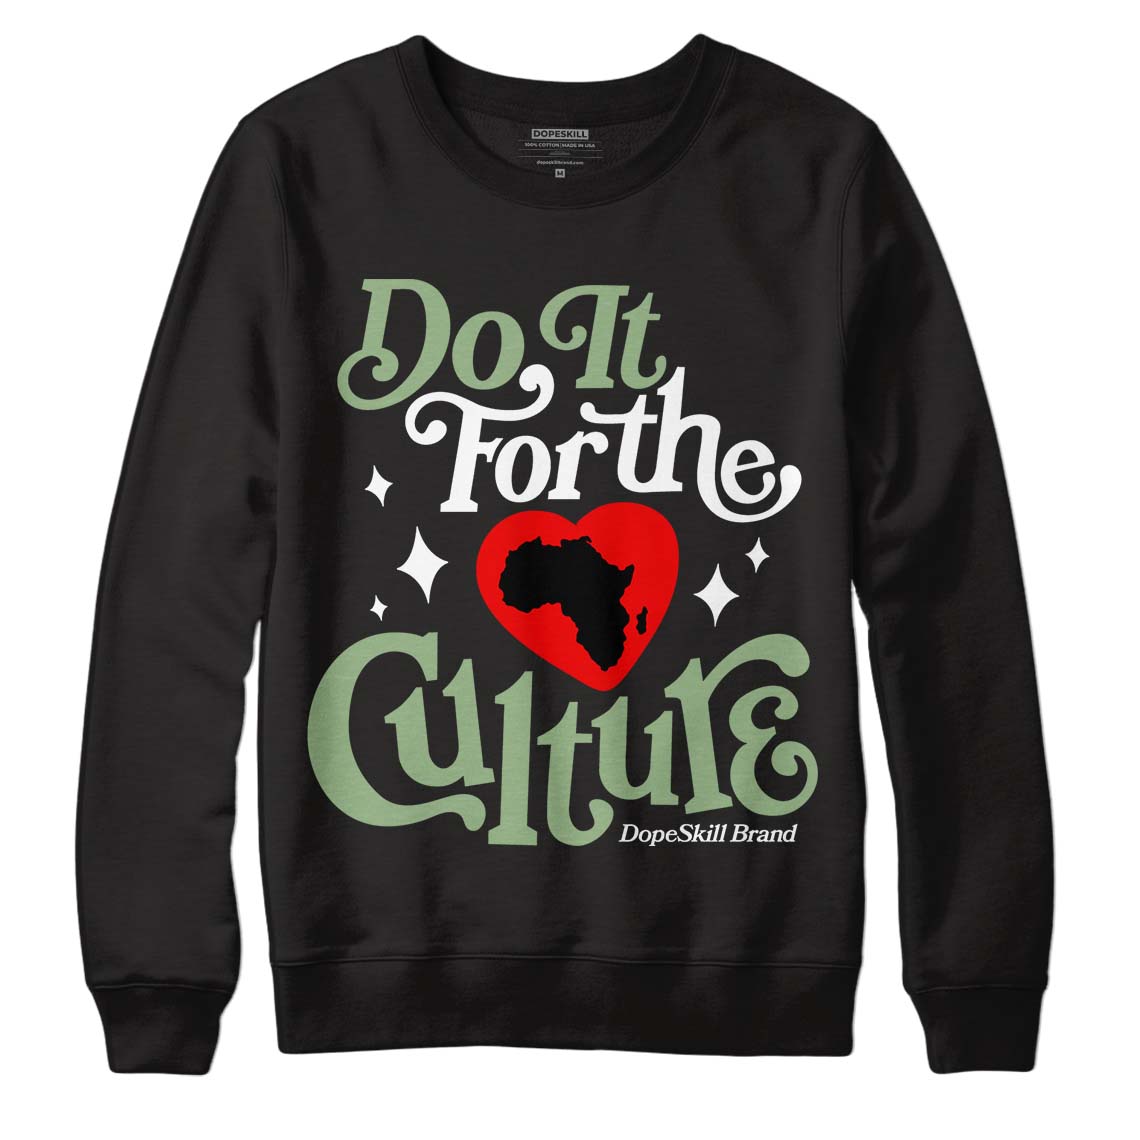 Jordan 4 Retro “Seafoam” DopeSkill Sweatshirt Do It For The Culture Graphic Streetwear - Black